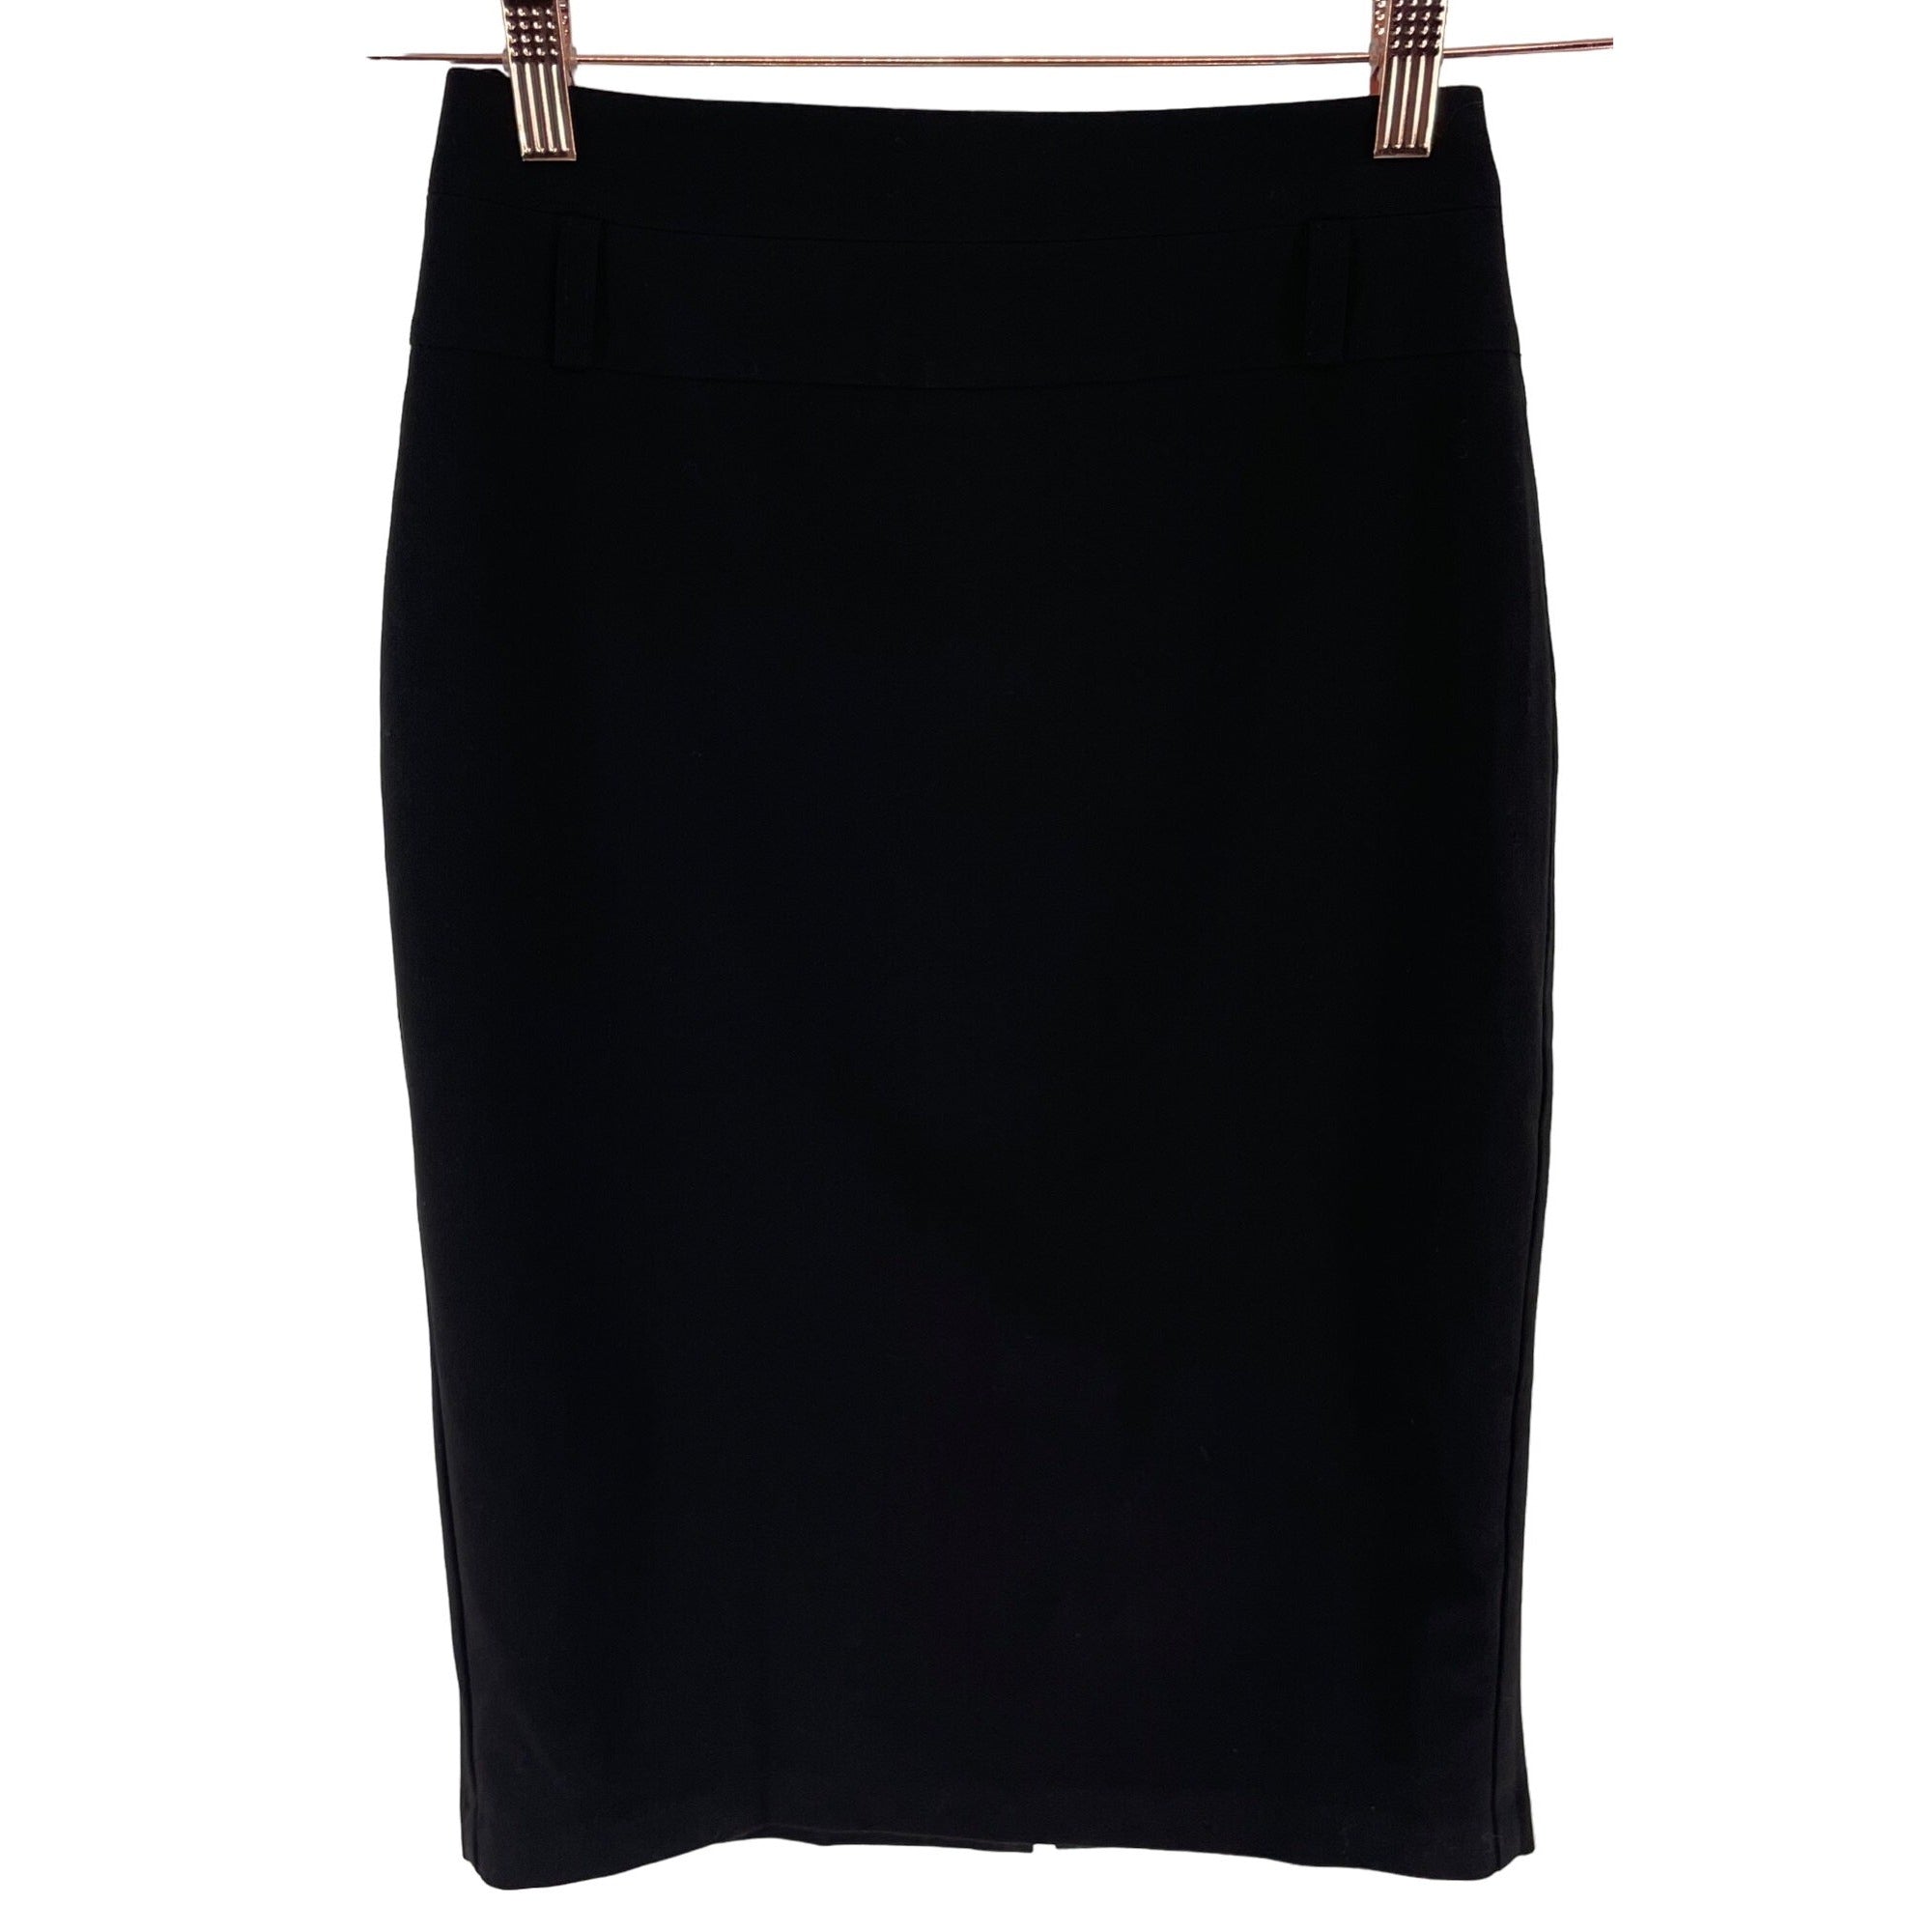 Kelso Petite Women's Size 6 Black Pencil Skirt